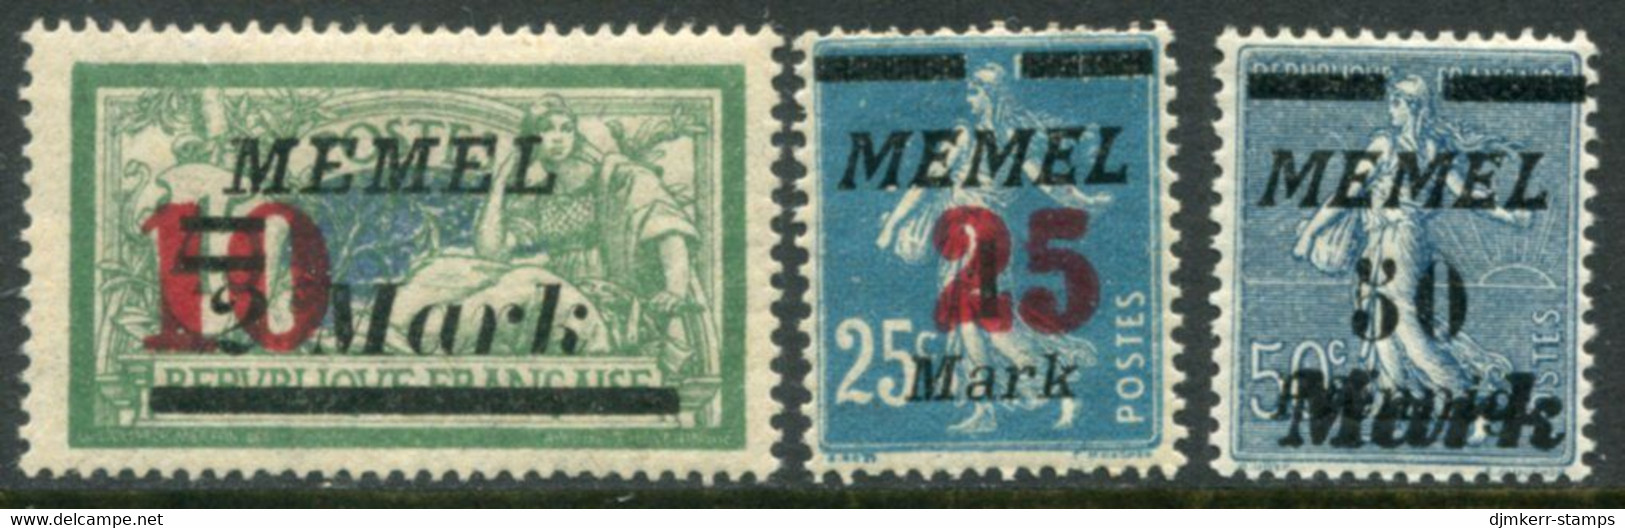 MEMEL  (Lithanian Occ.) 1923 Overprints On France LHM / *.  Michel 121-23 - Klaipeda 1923